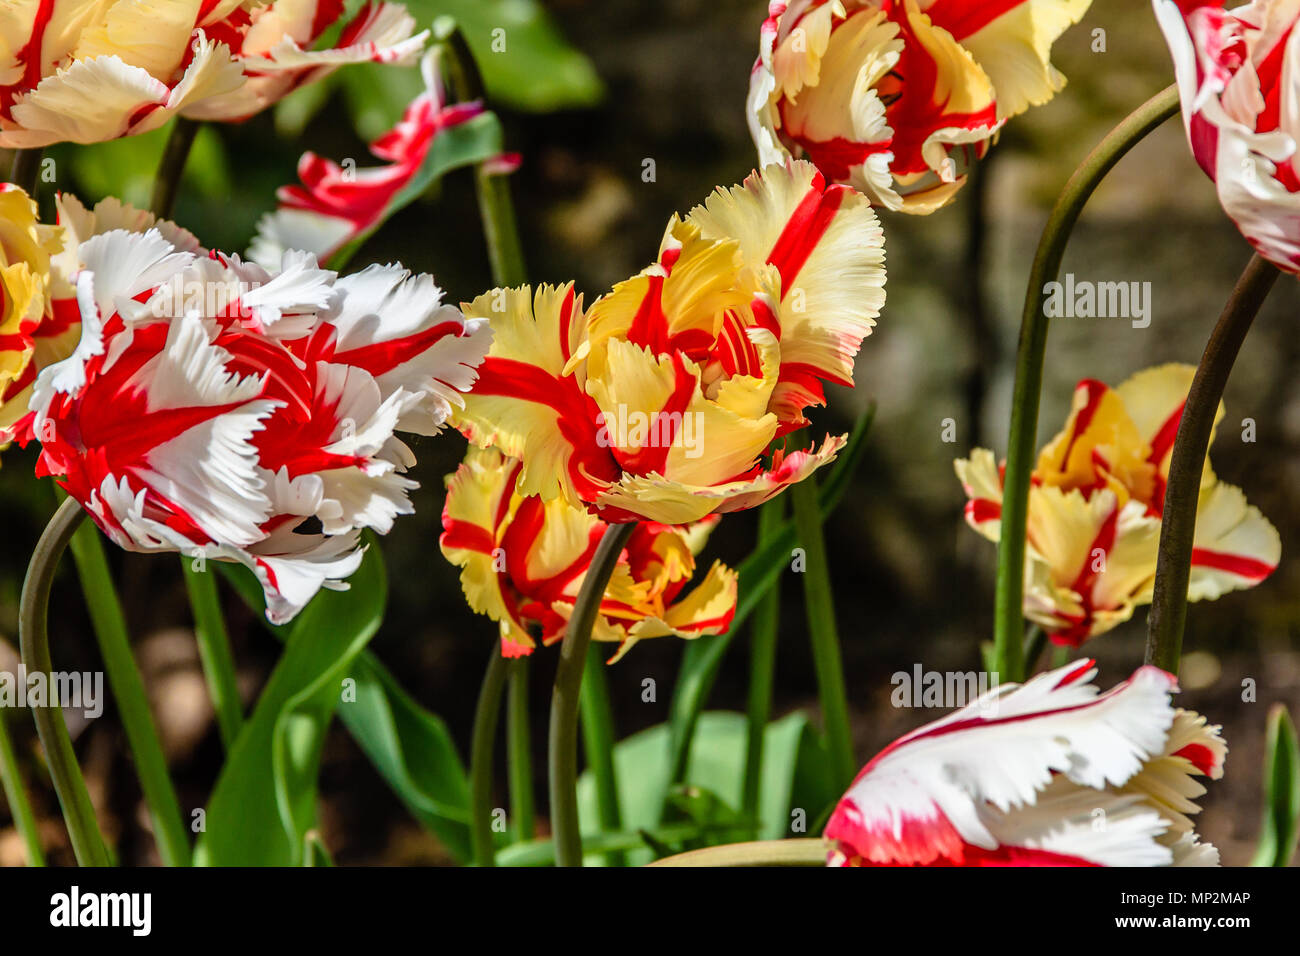 Parrot flamígero tulipanes, mayo de 2018 Foto de stock